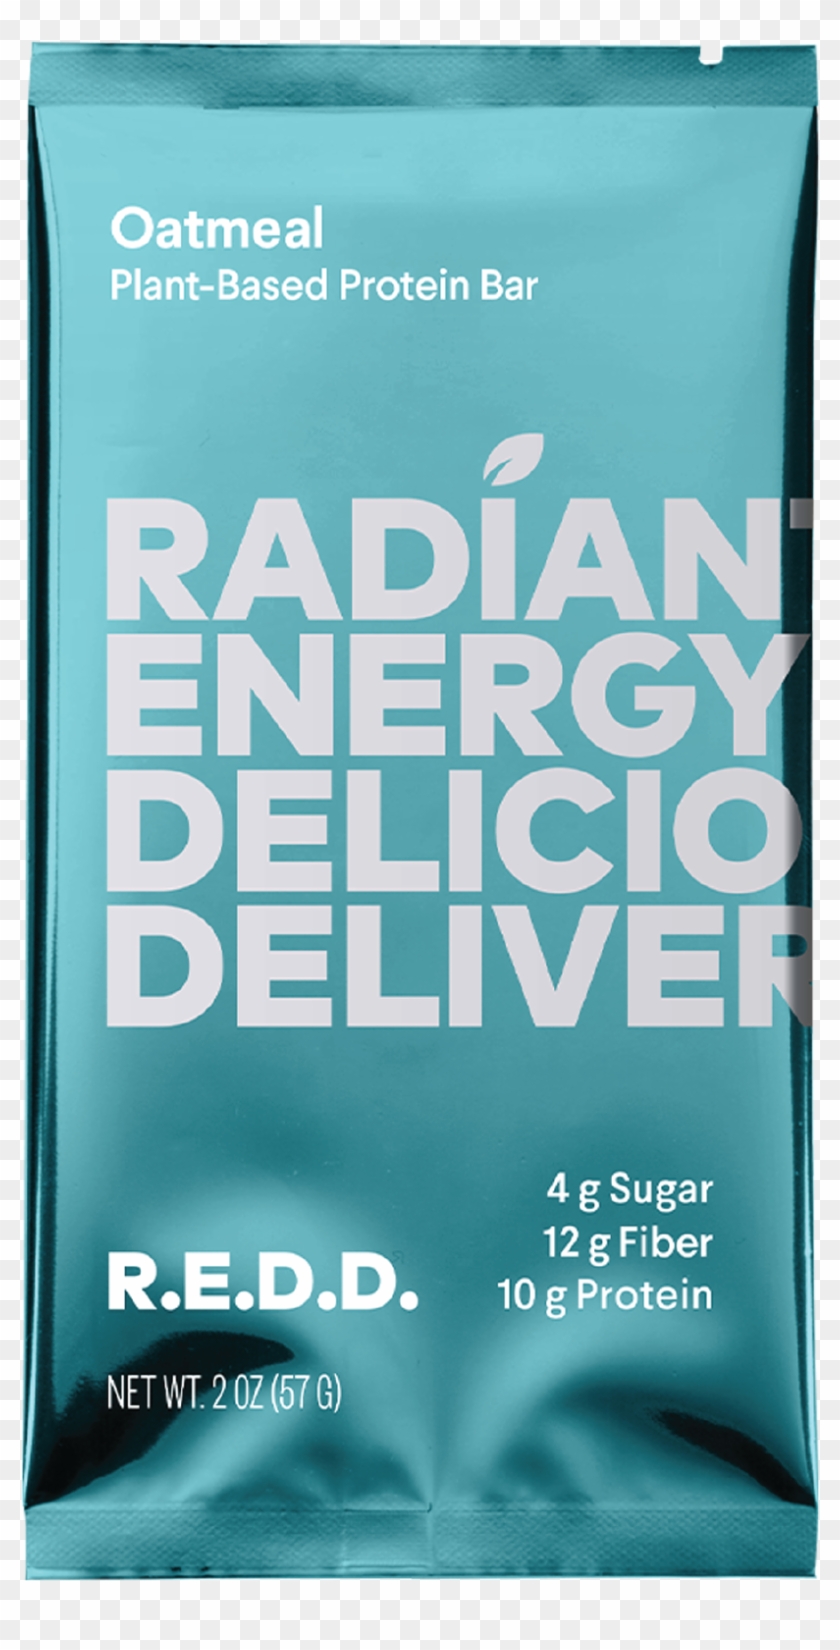 R - E - D - D - Oatmeal Energy Bar - Book Cover Clipart #2772881